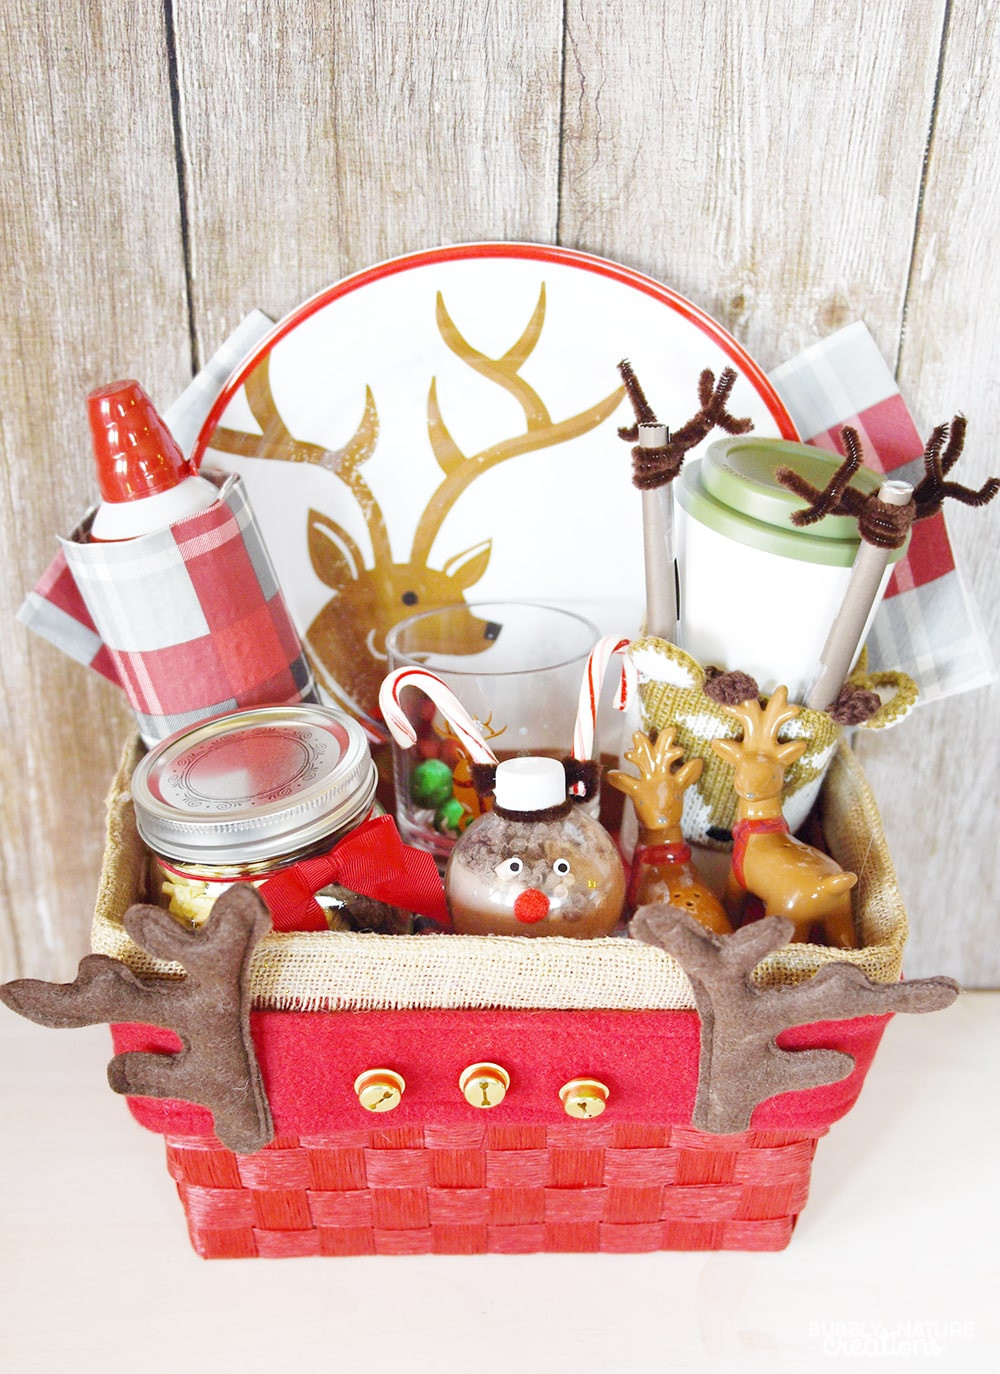 Fun Gift Basket Ideas
 Reindeer Gift Basket Sprinkle Some Fun